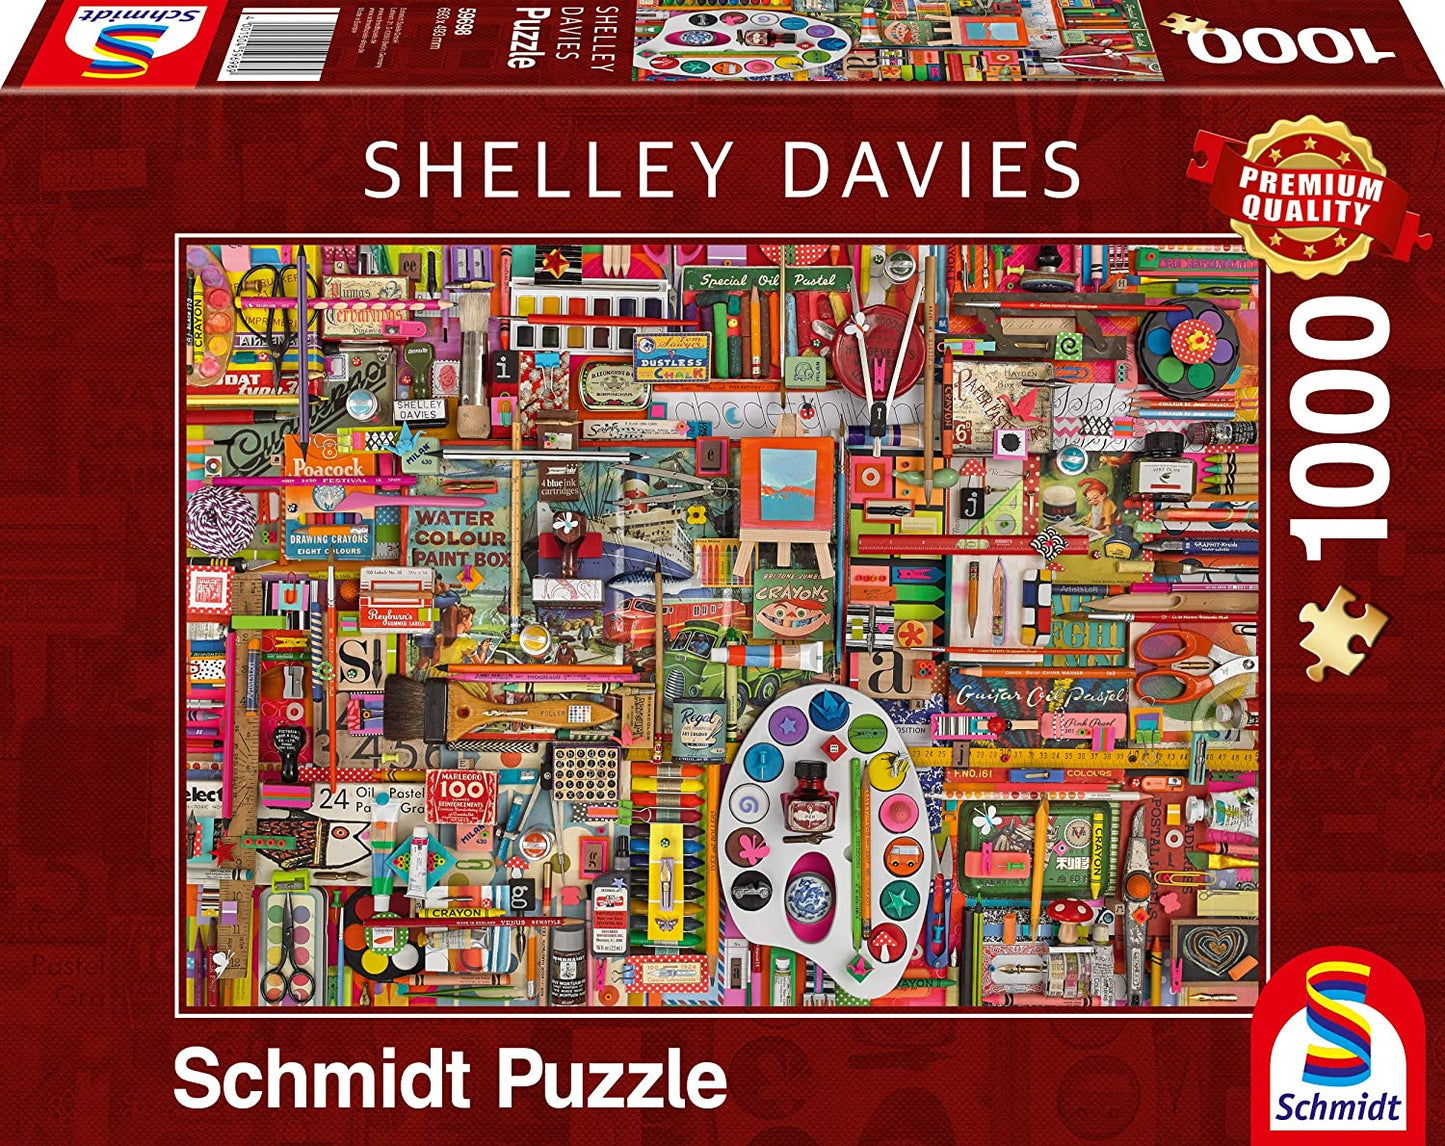 Schmidt - Shelley Davies: Vintage Artist Materials - 1000 Piece Jigsaw Puzzle